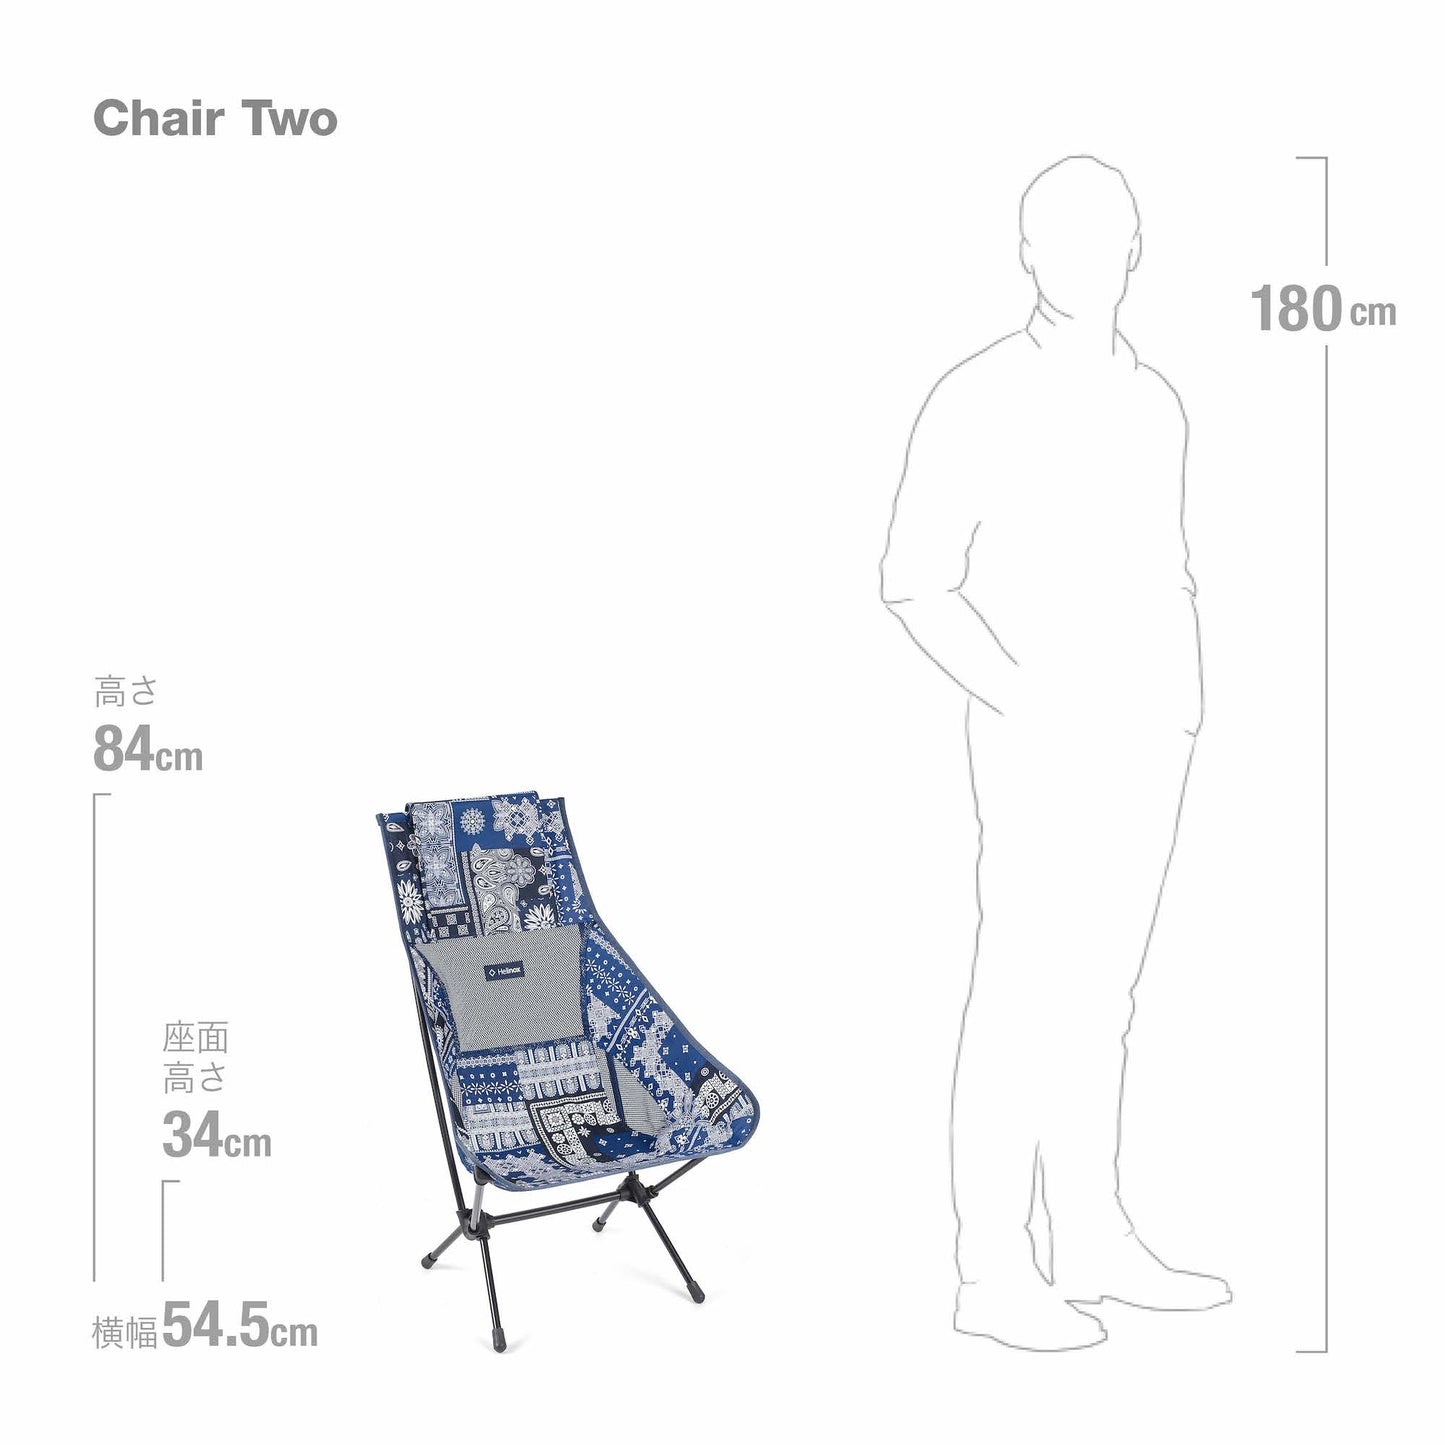 Chair Two - Blue Bandanna Quilt